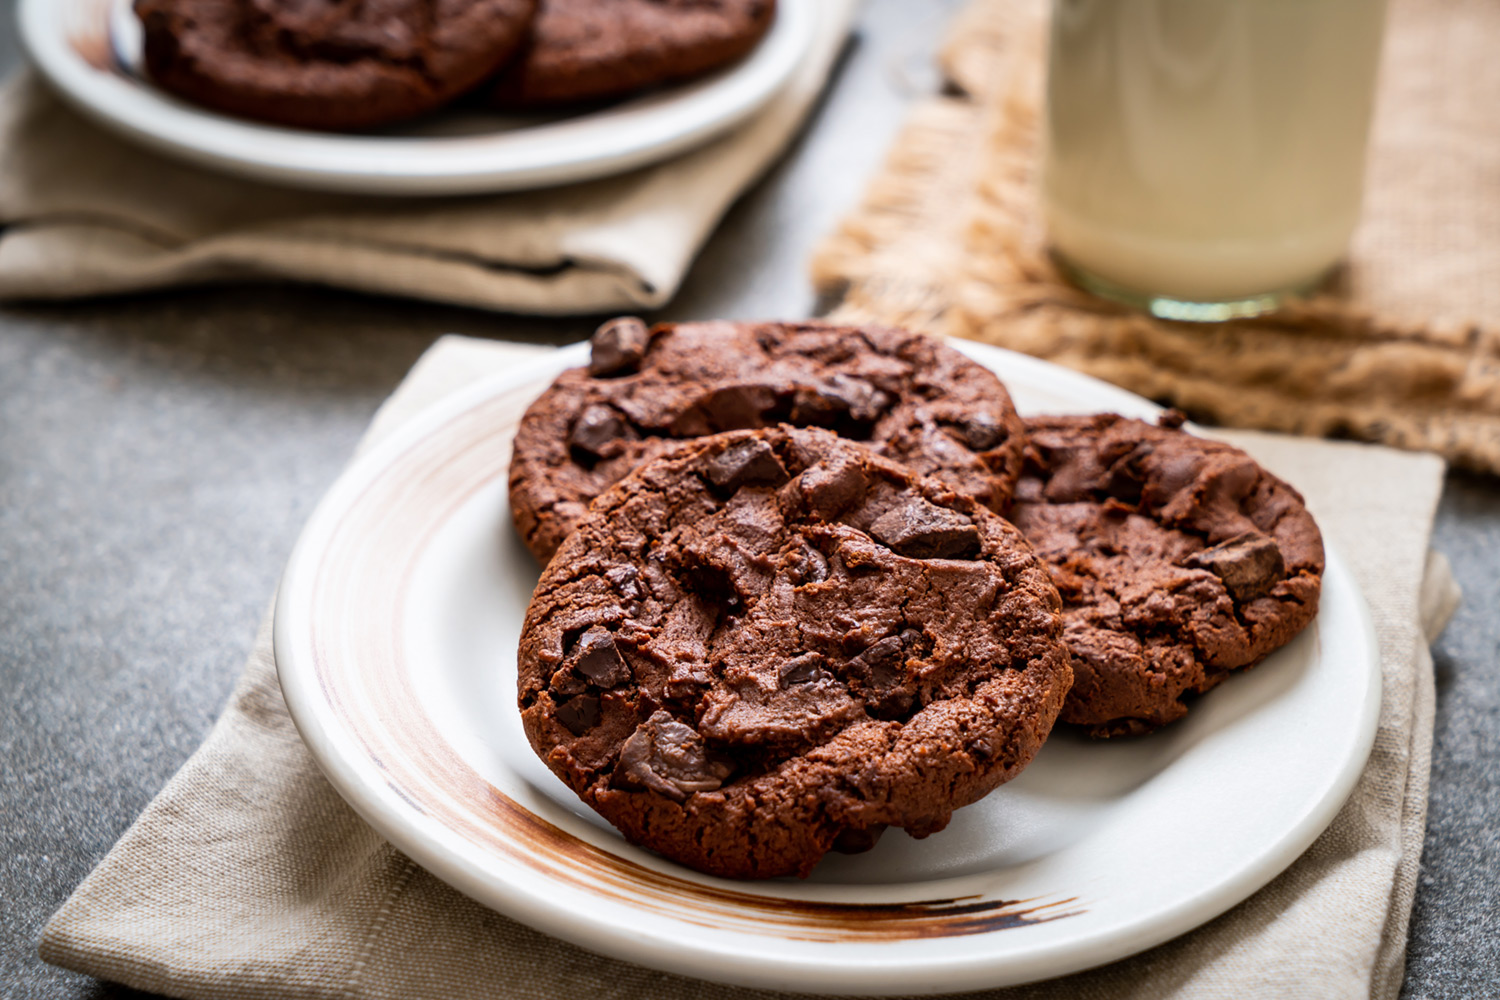 Provardo Chocolate - Double Chocolate Cookies